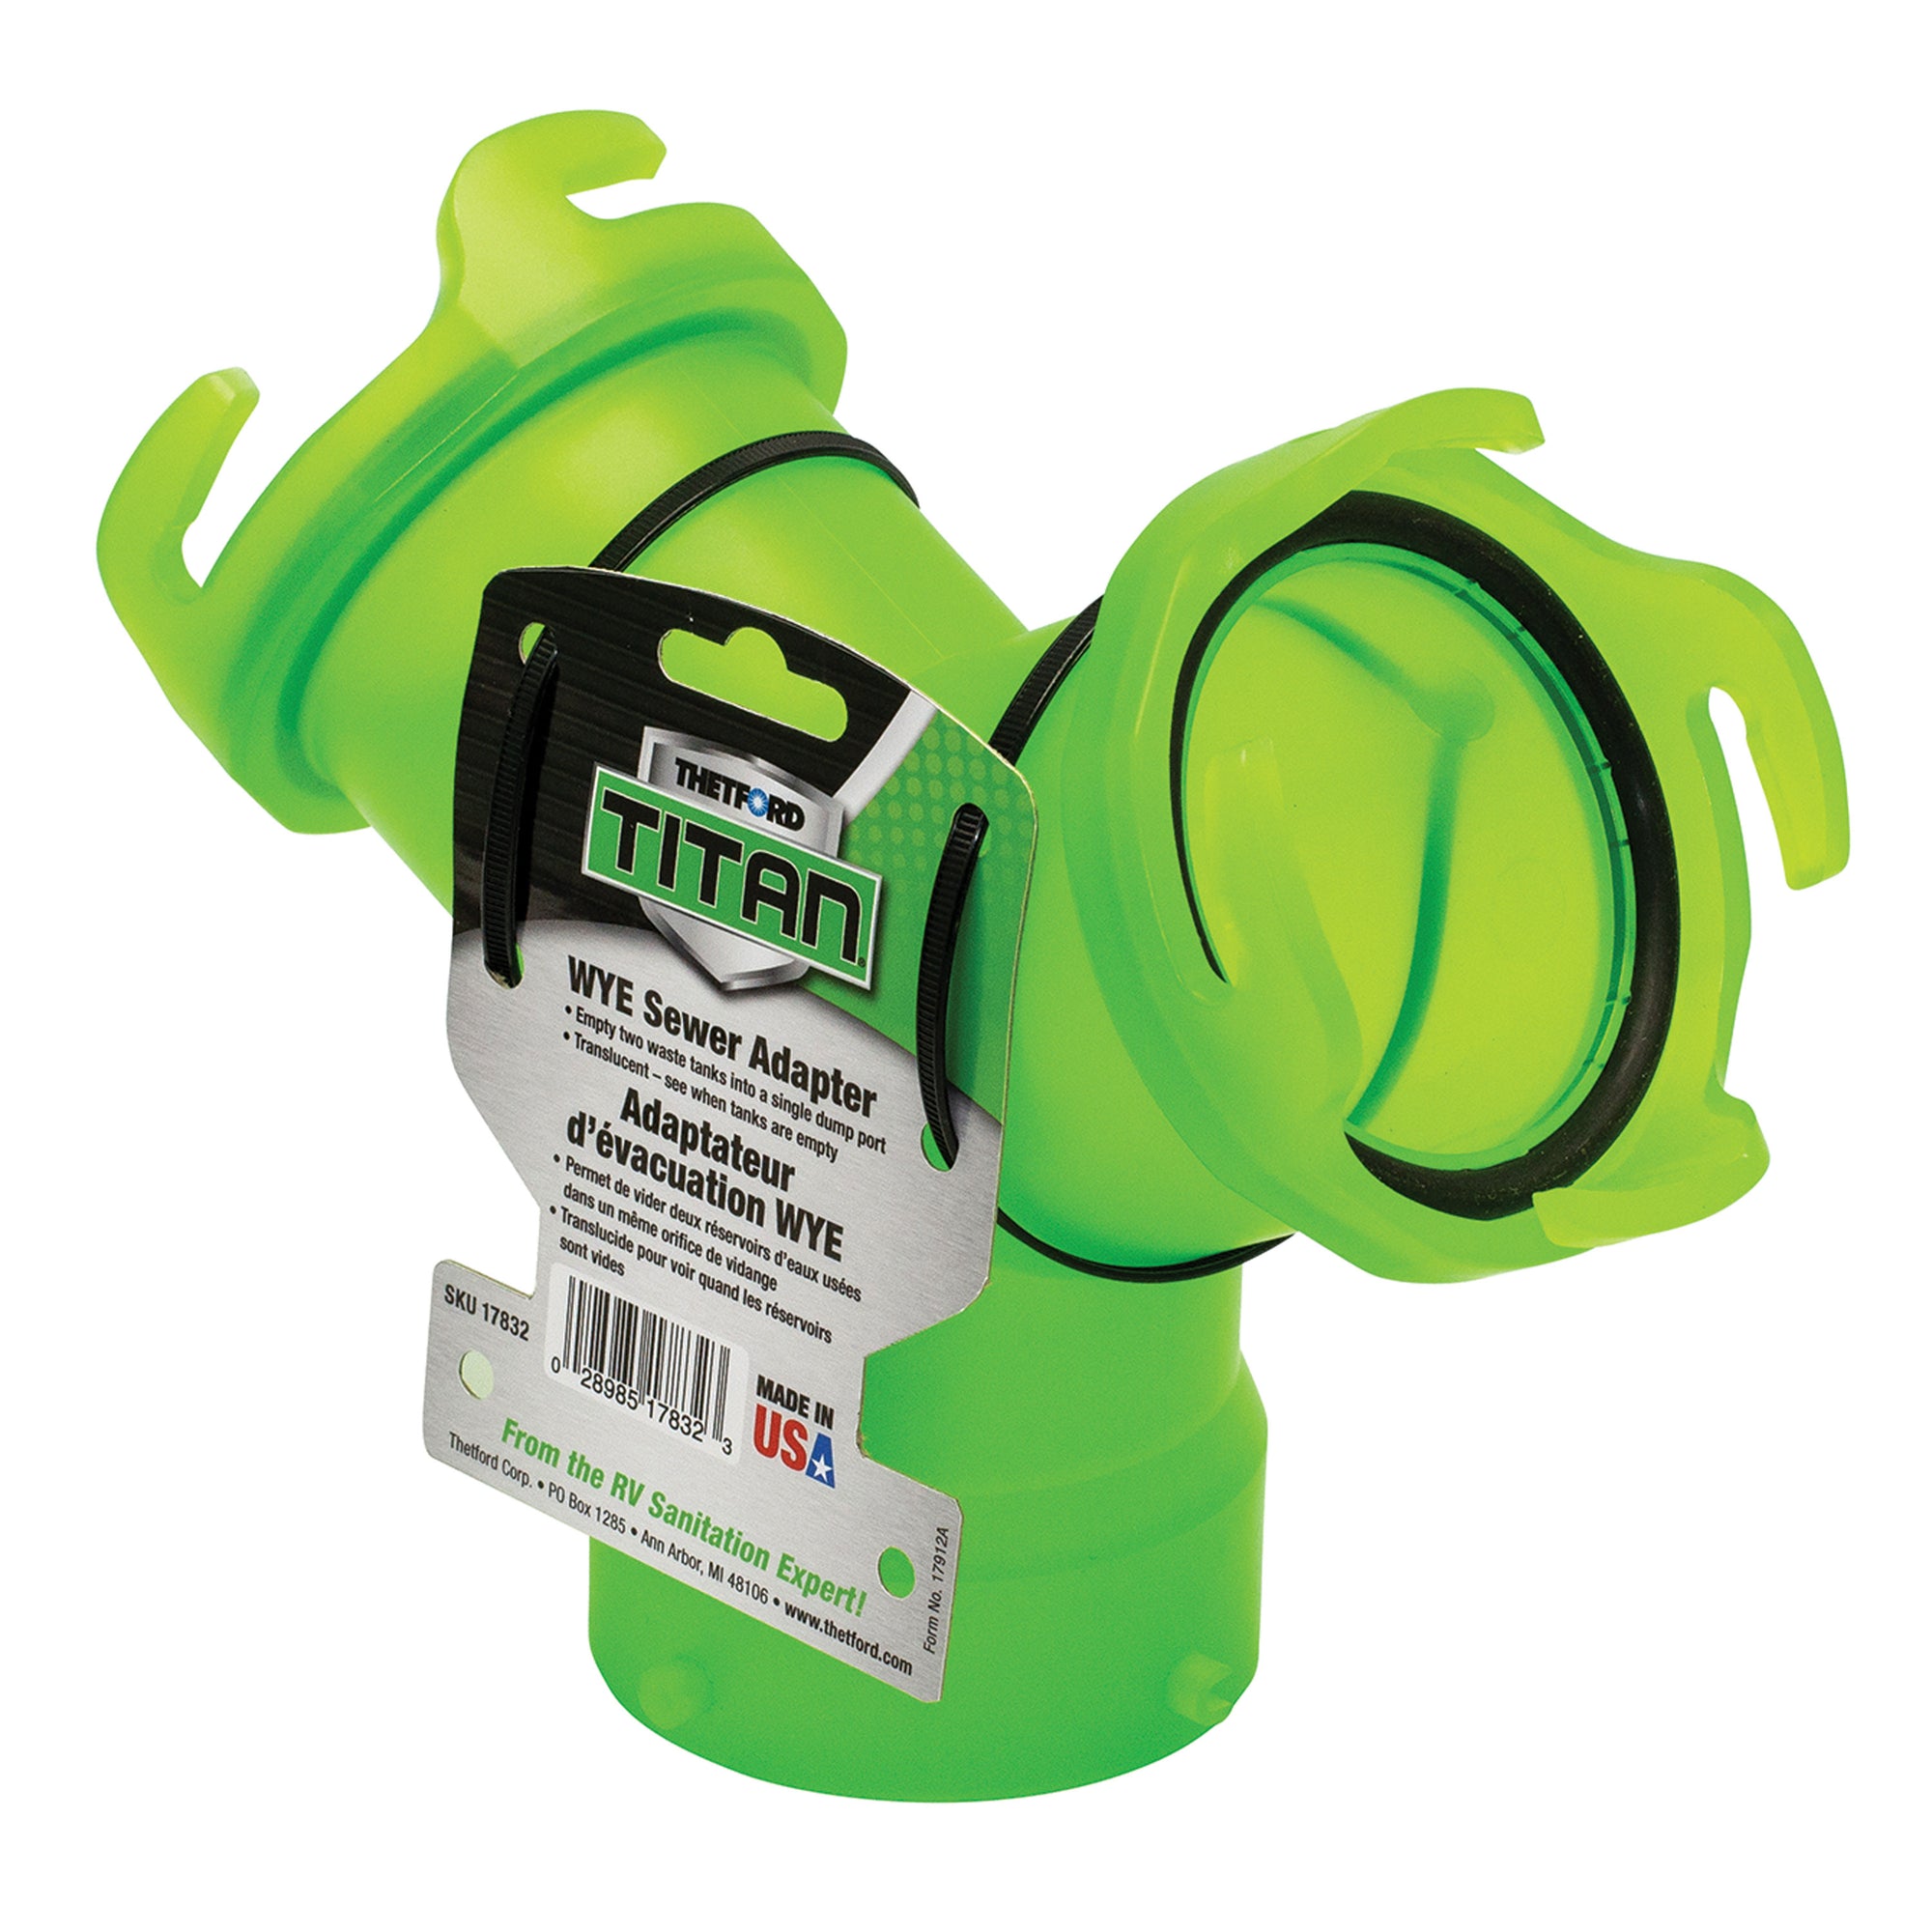 Thetford 17832 Titan Wye Sewer Adapter - Translucent Green